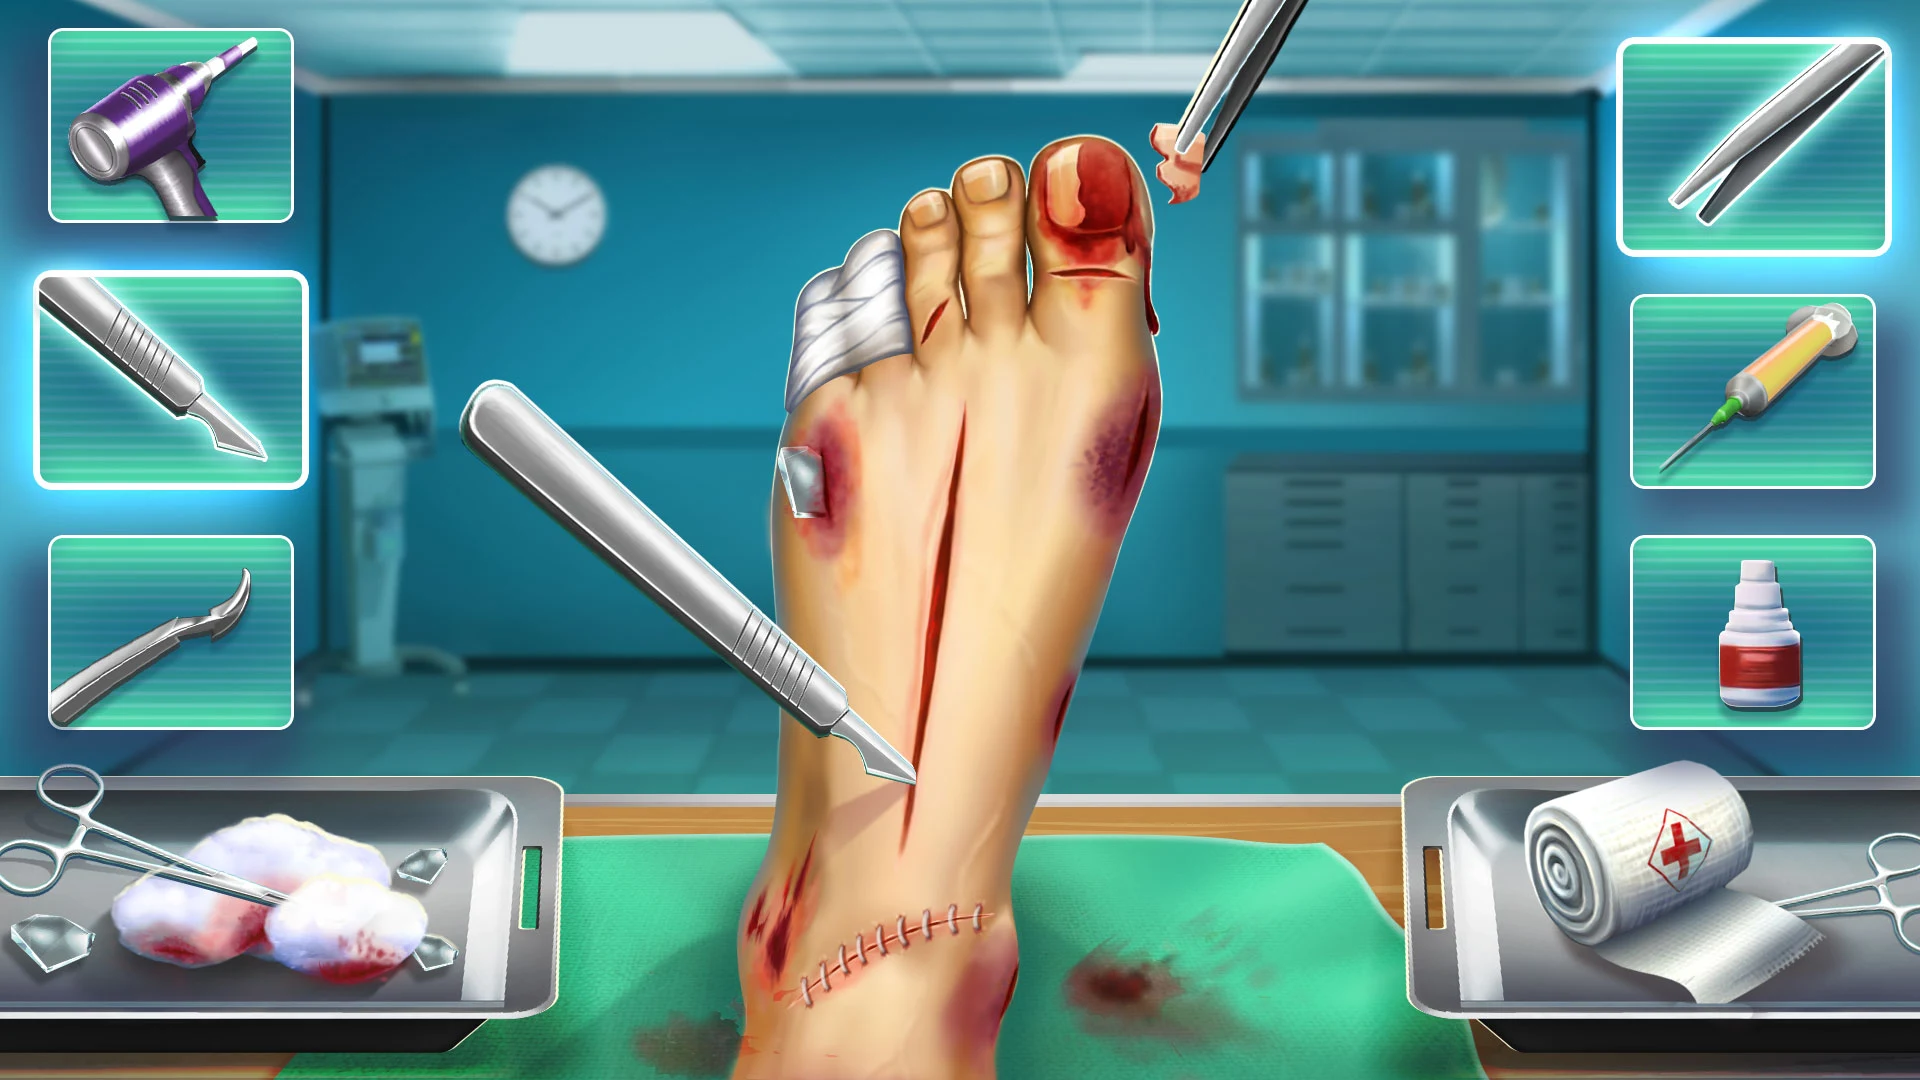 Download Surgeon Simulator Doctor Games Full Version